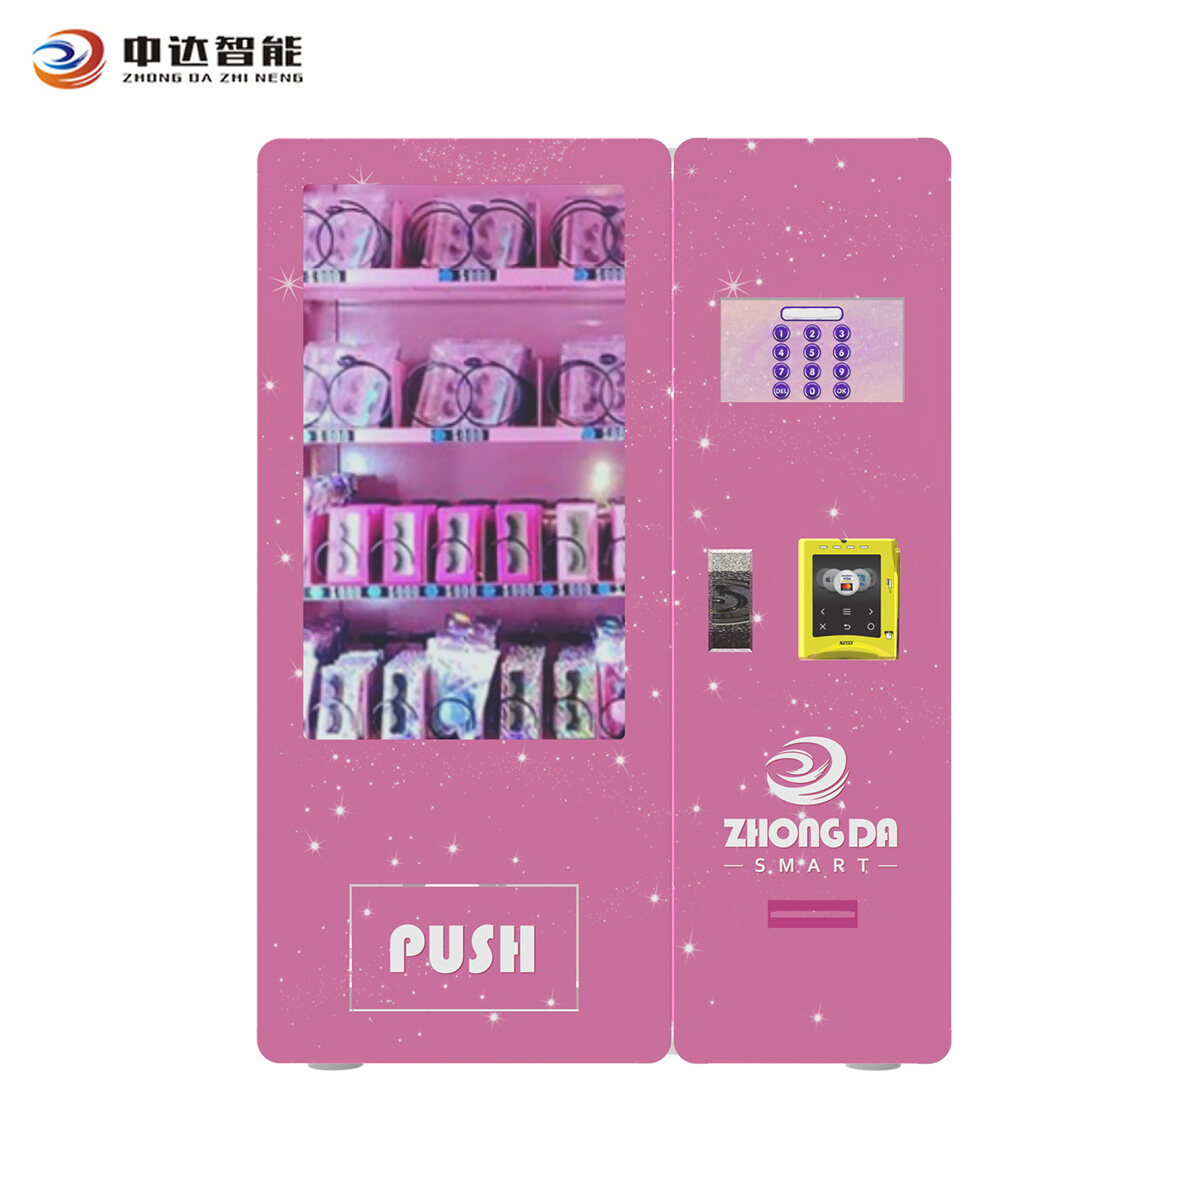 lash vending machine Automatic vending machine